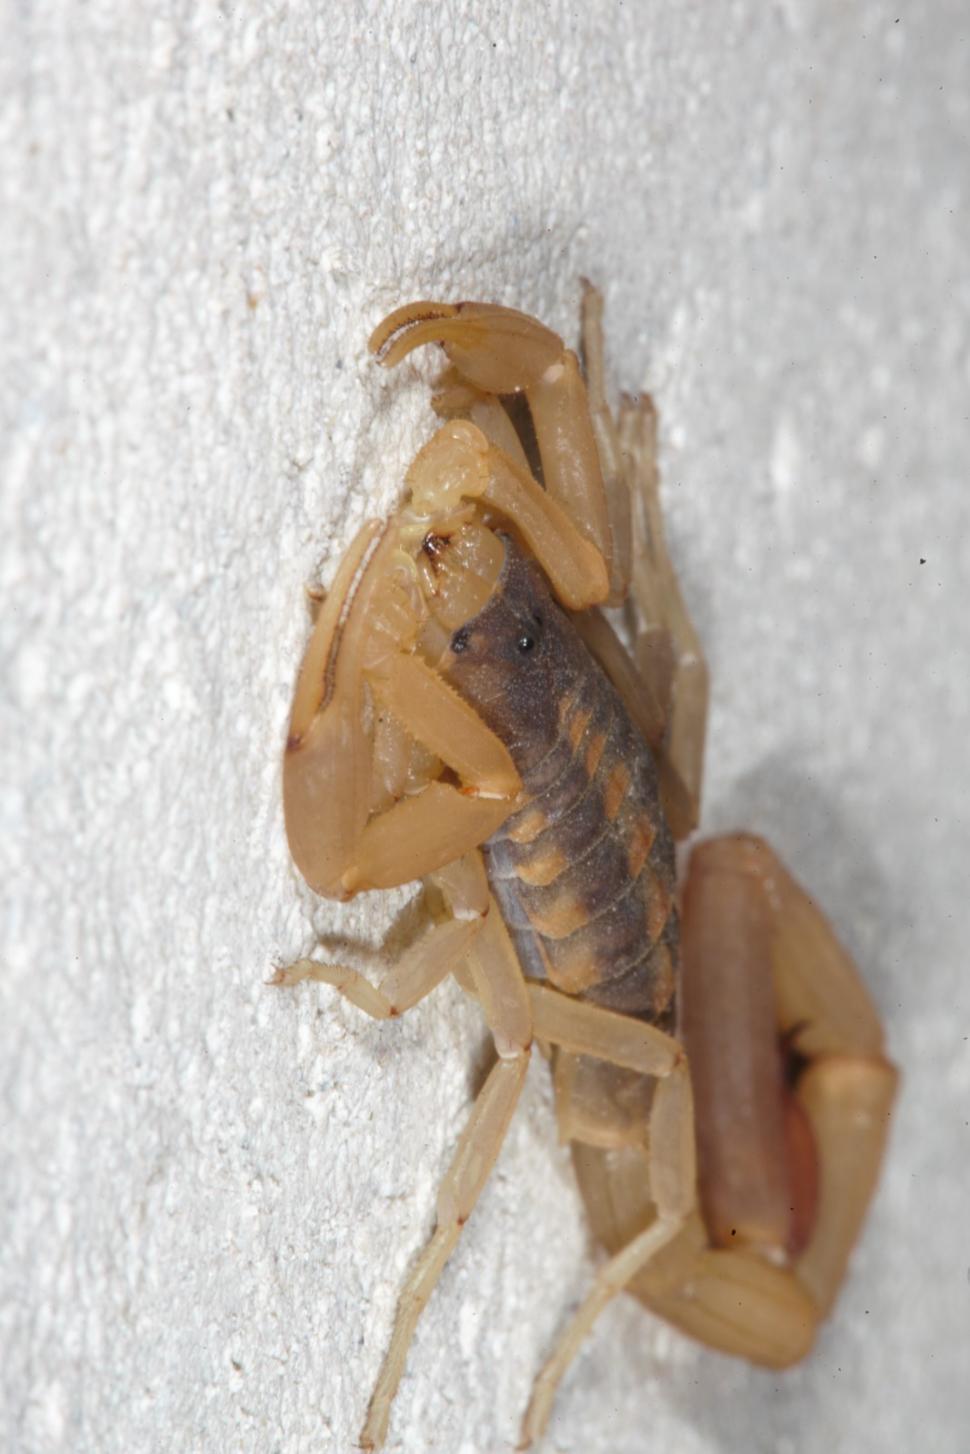 Free Image of Scorpion 